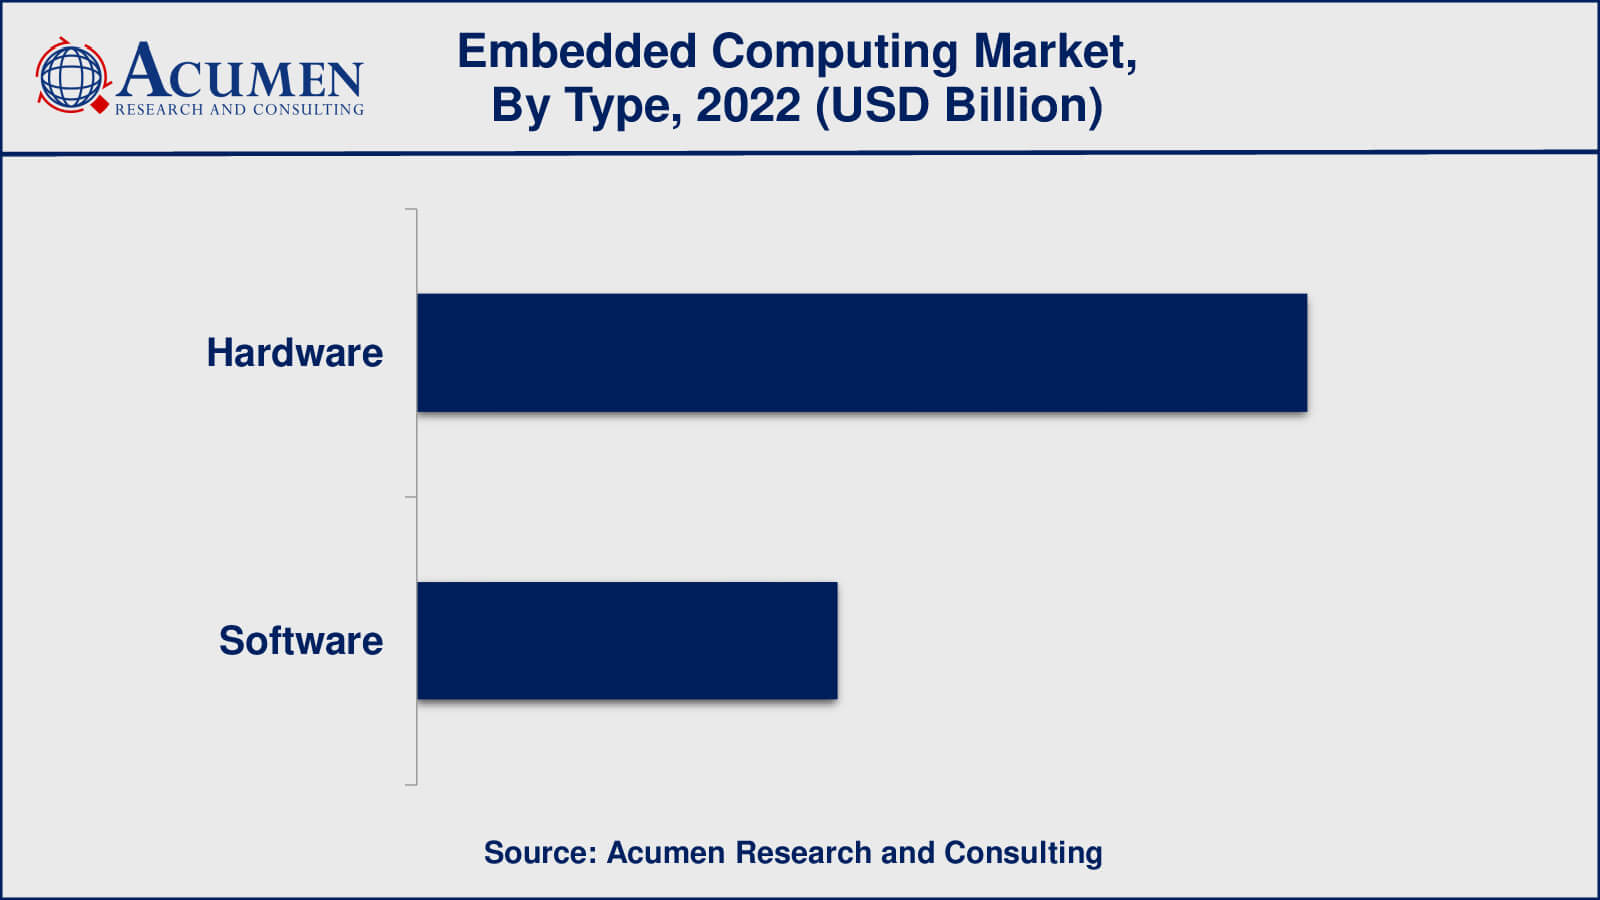 Embedded Computing Market Size